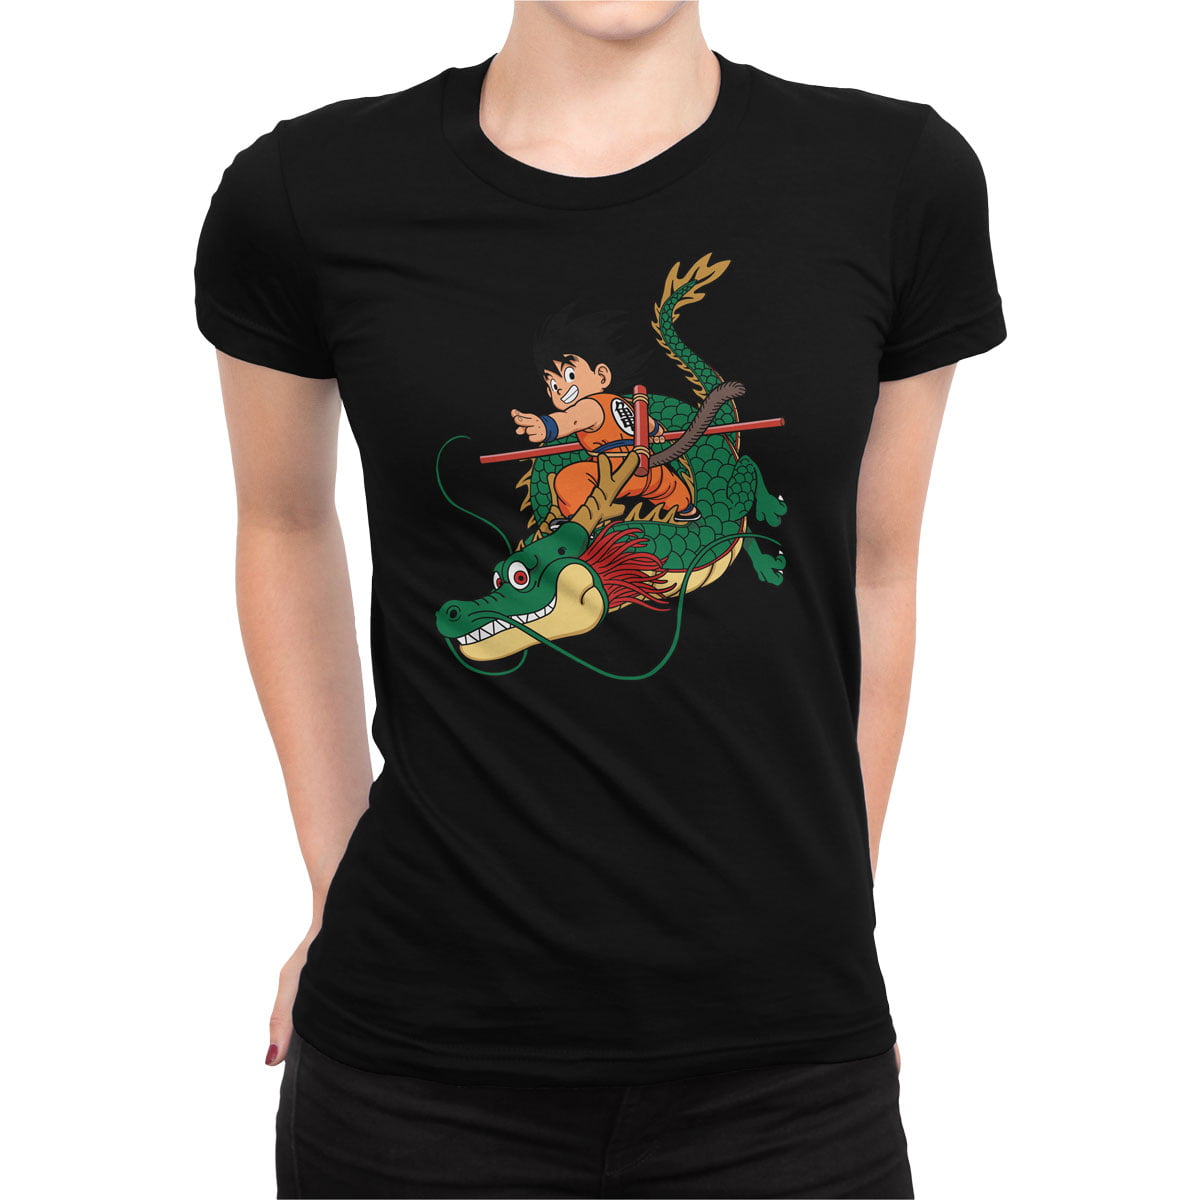 Dragonball 3 shirt s kadin - dragon ball goku no5 baskılı kadın t-shirt - figurex